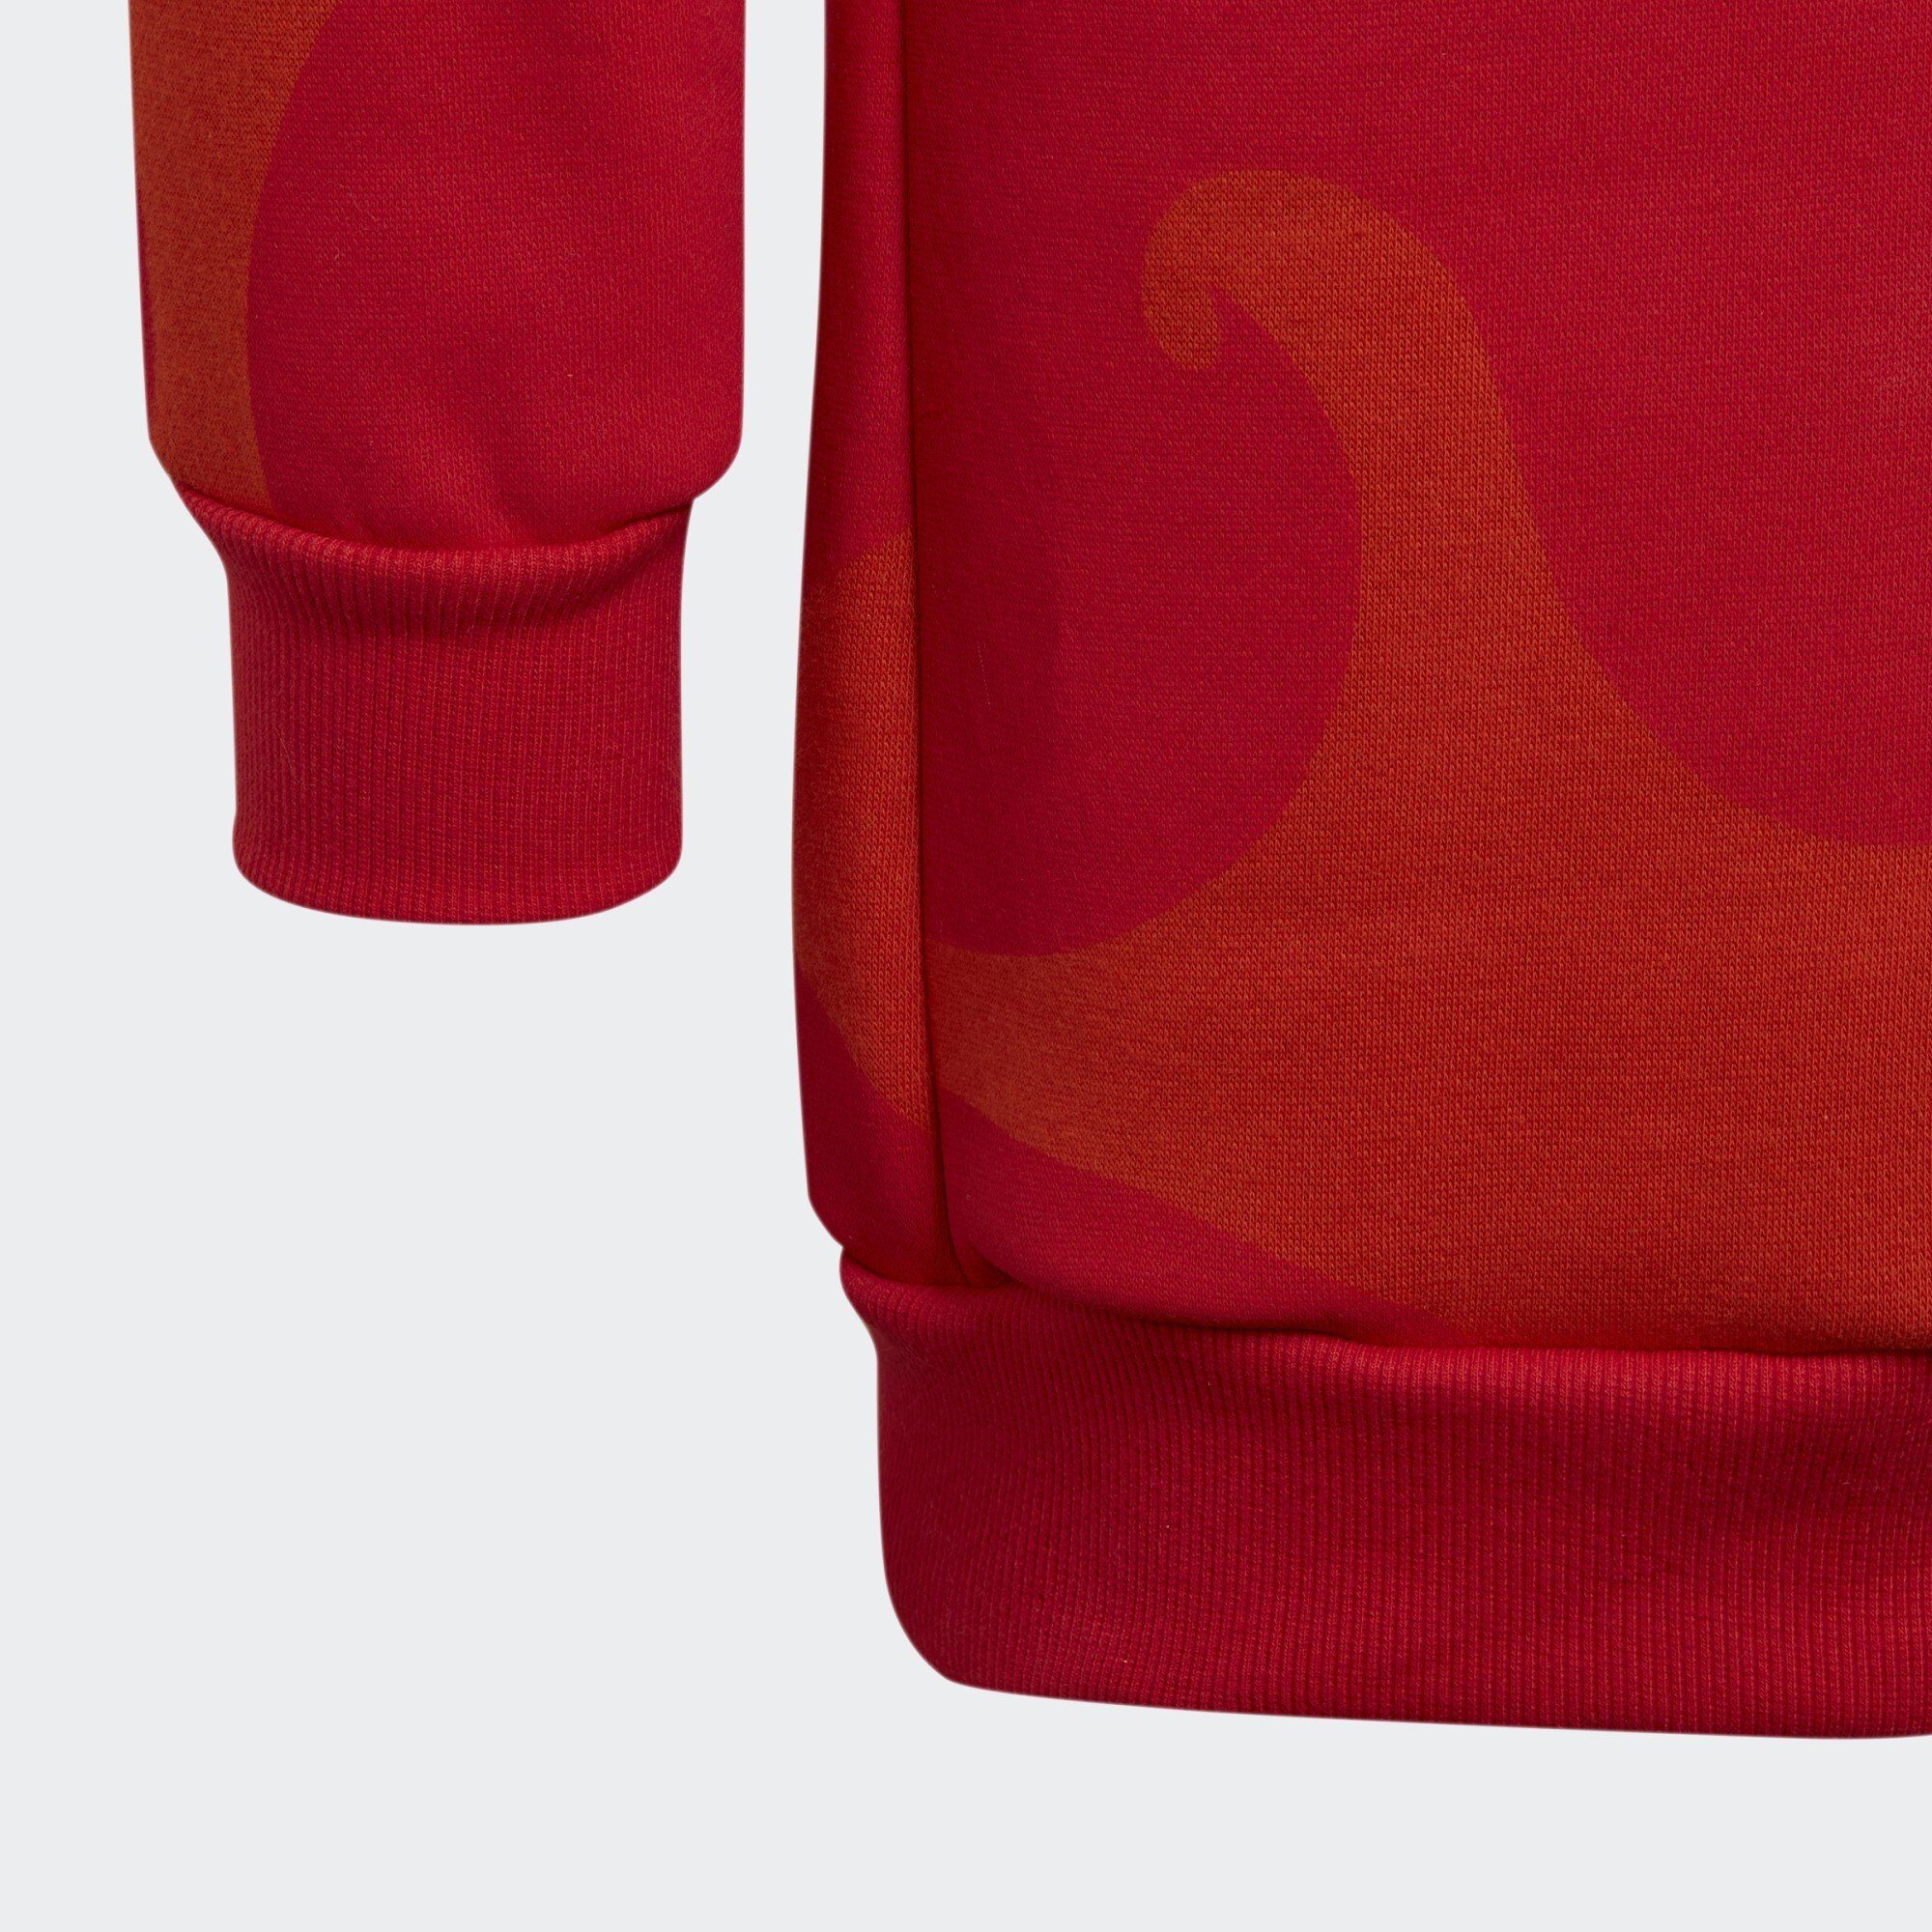 Orange Lush adidas MARIMEKKO Collegiate Sportswear SET Red / Trainingsanzug